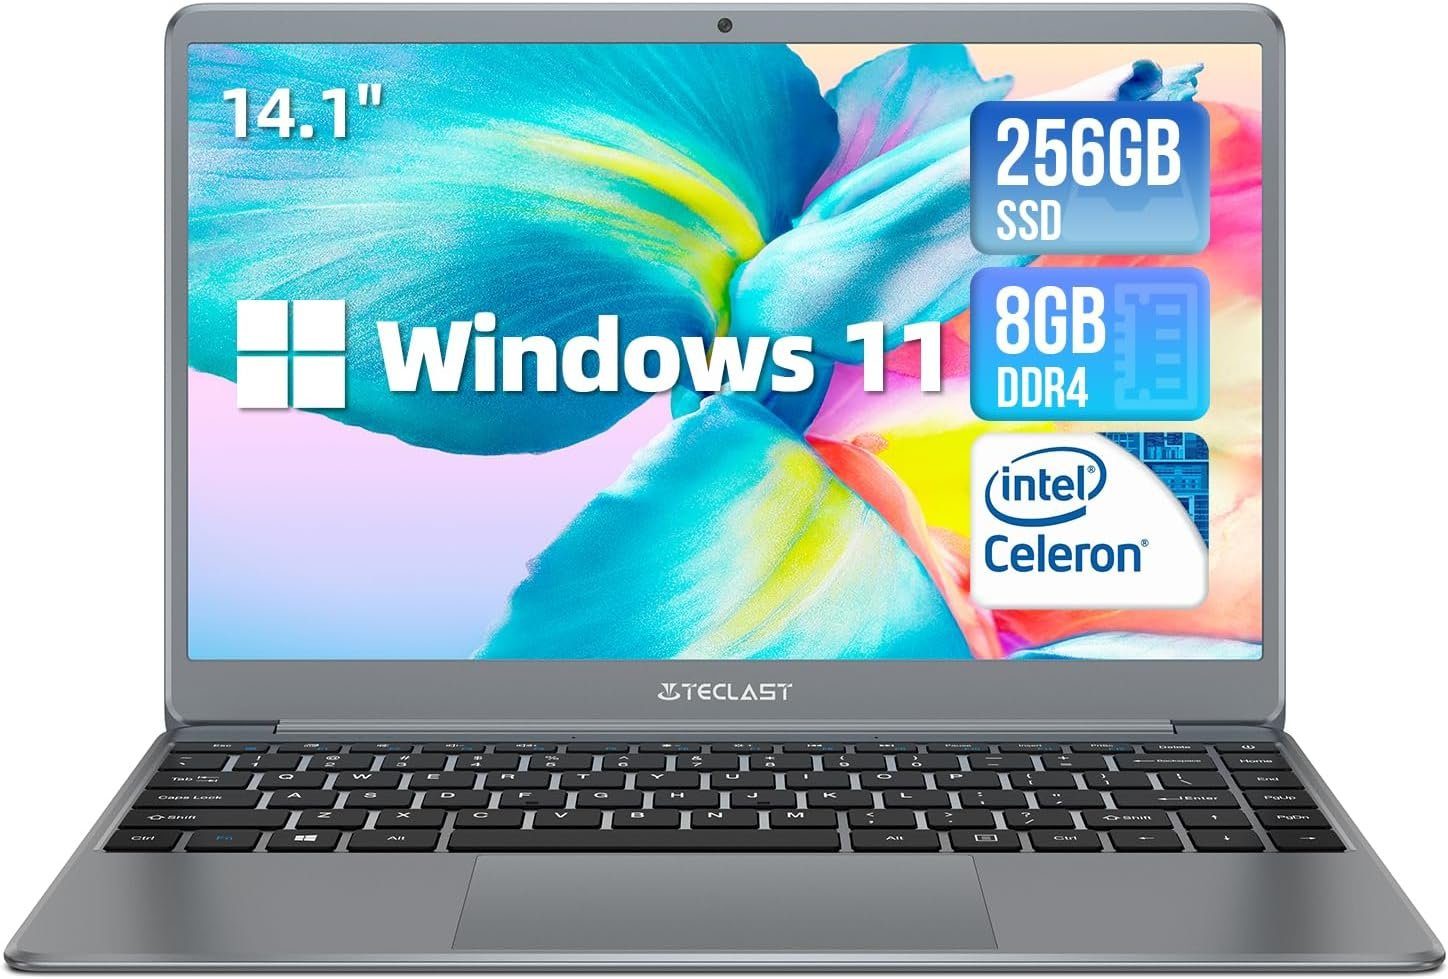 TECLAST Notebook (Intel Celeron N4120, 256 GB SSD, 8GB RAM 256GB SSD, Windows 11, IPS Celeron N4120 2.6GHz, 2.4G/5G WiFi)